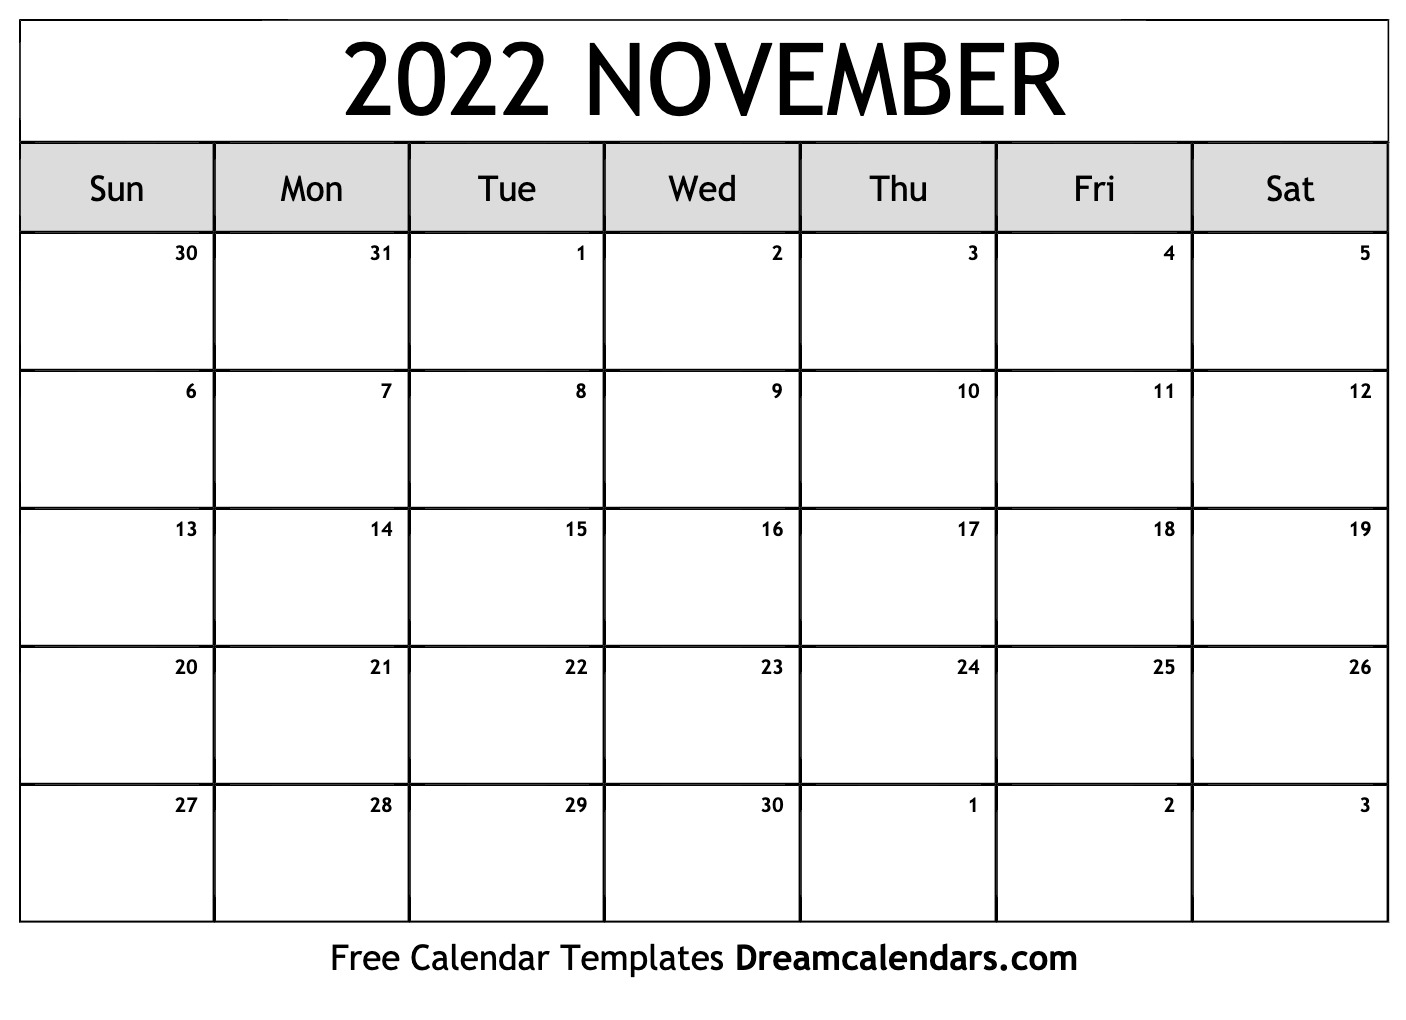 November 2022 Calendar To Print Download Printable November 2022 Calendars